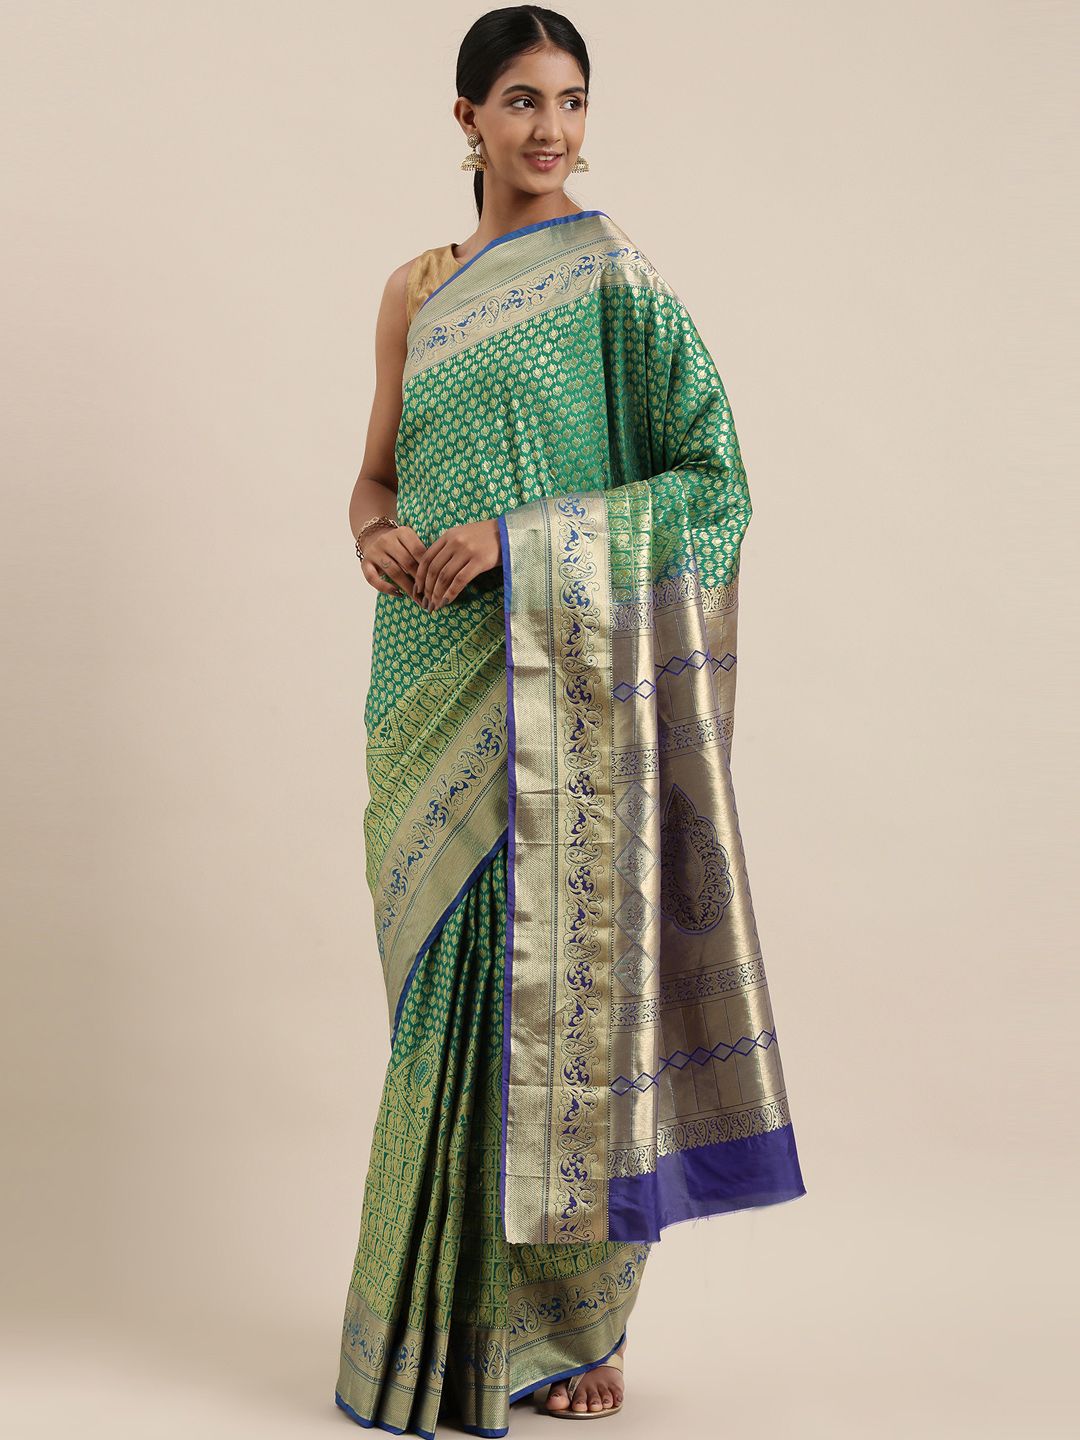 The Chennai Silks Classicate Green & Gold-Toned Ethnic Motifs Zari Art Silk Saree Price in India